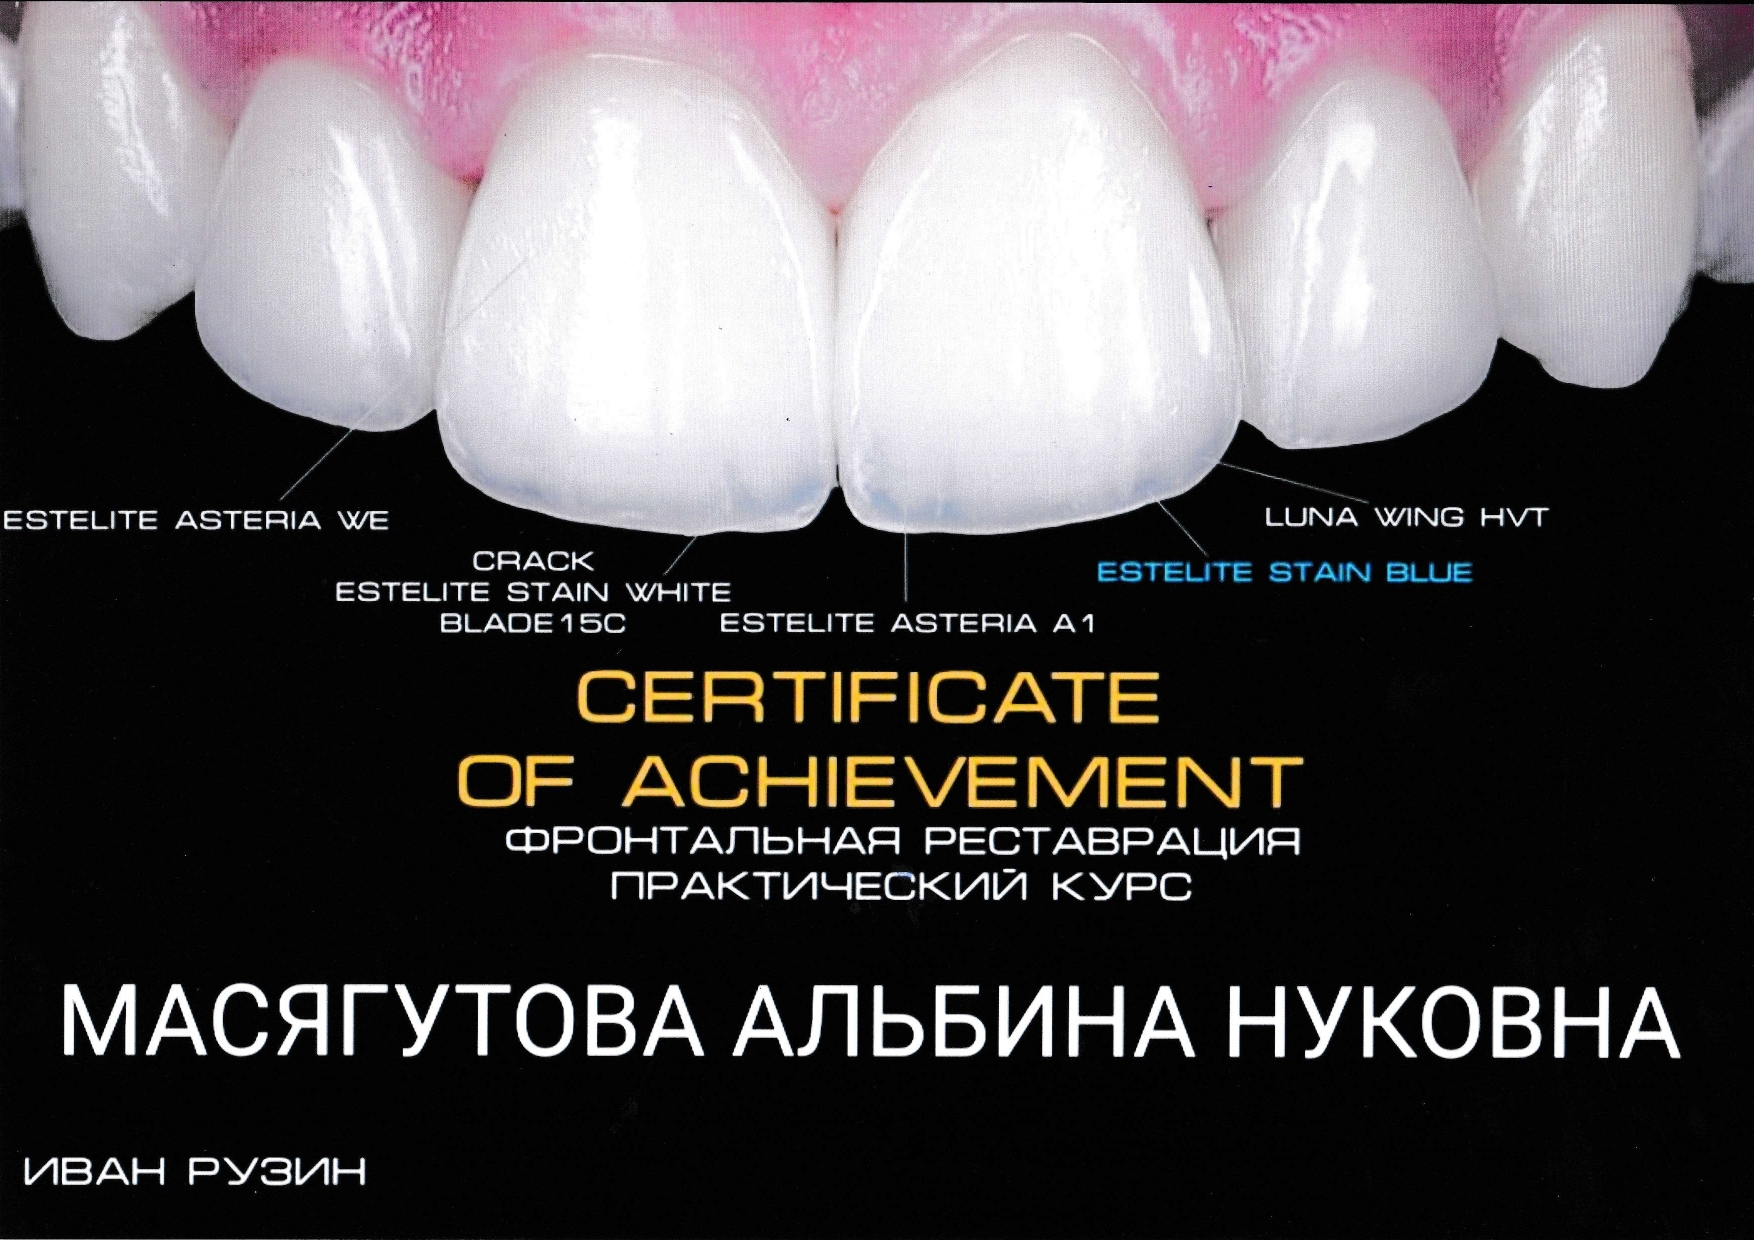 Сертификат - Масягутова Альбина